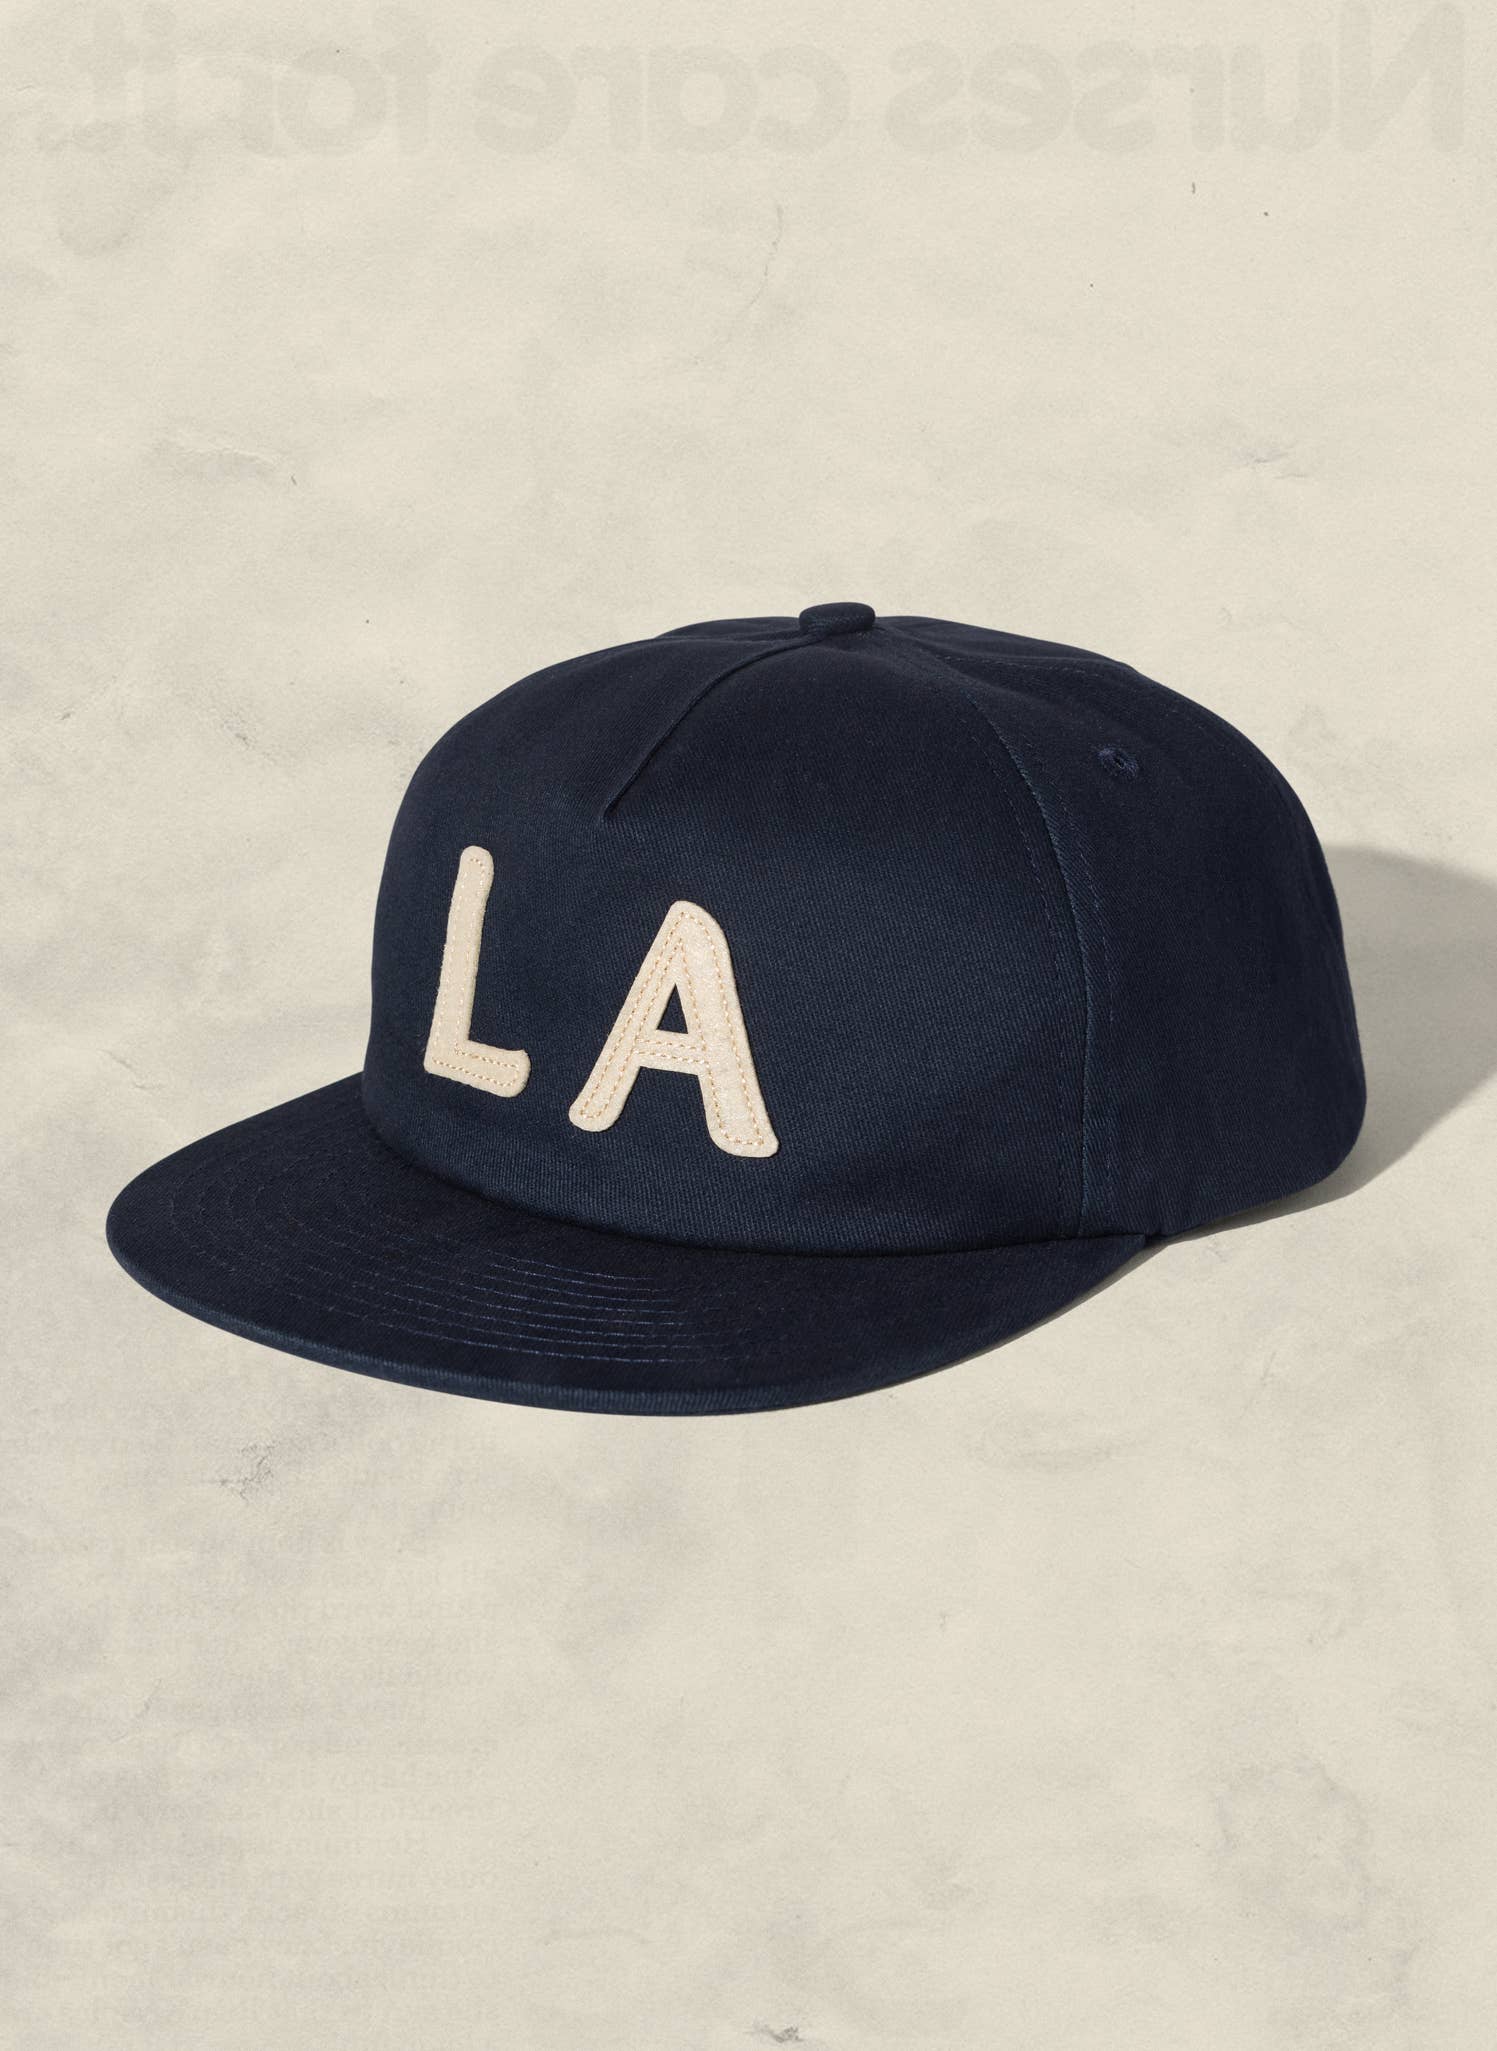 LA felt field trip hat